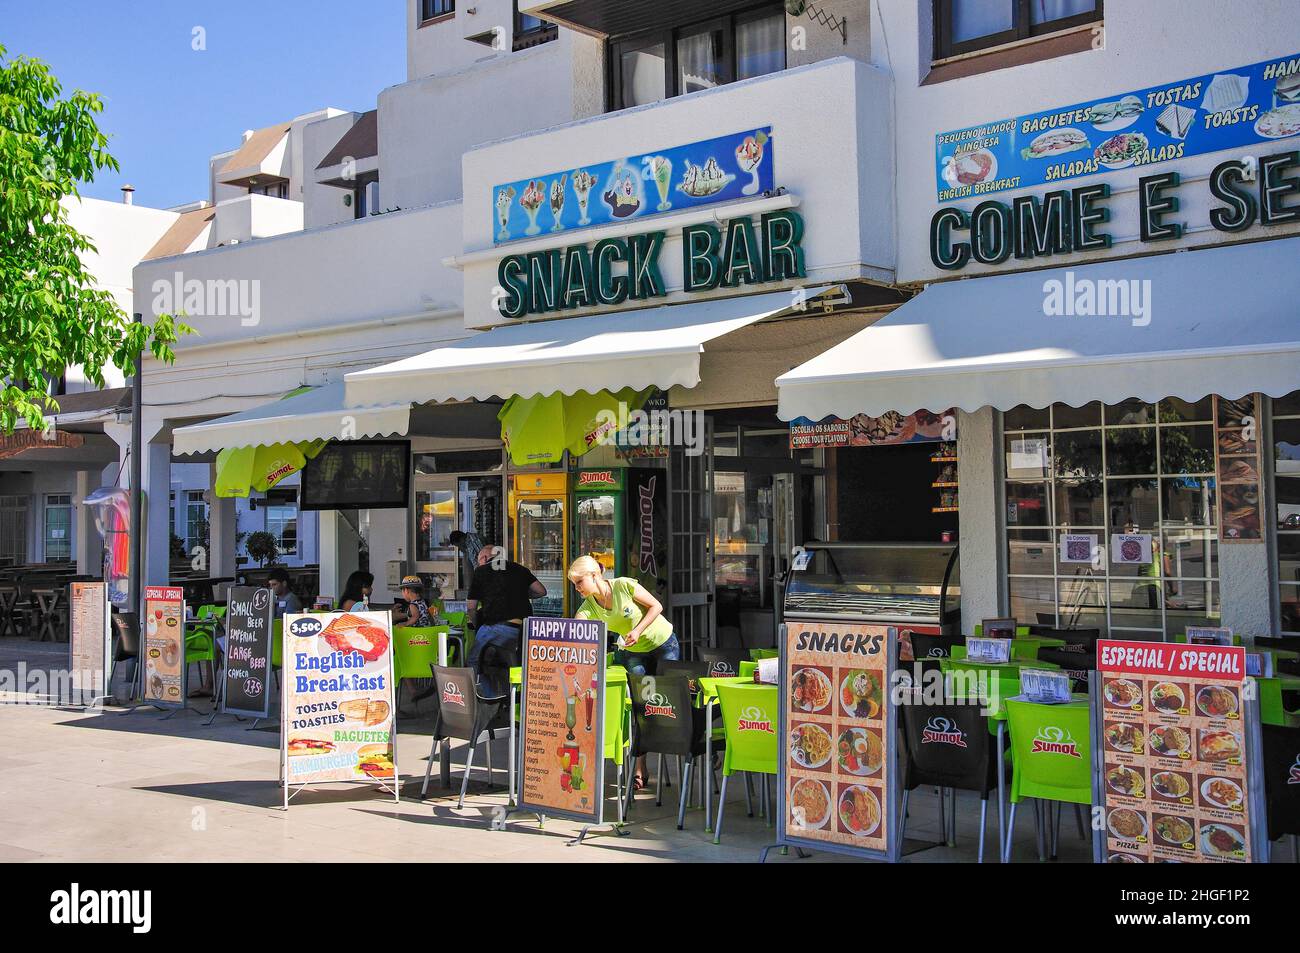 Waterfront snack bar, Old Town, Albufeira, Algarve Region, Portugal Stock Photo